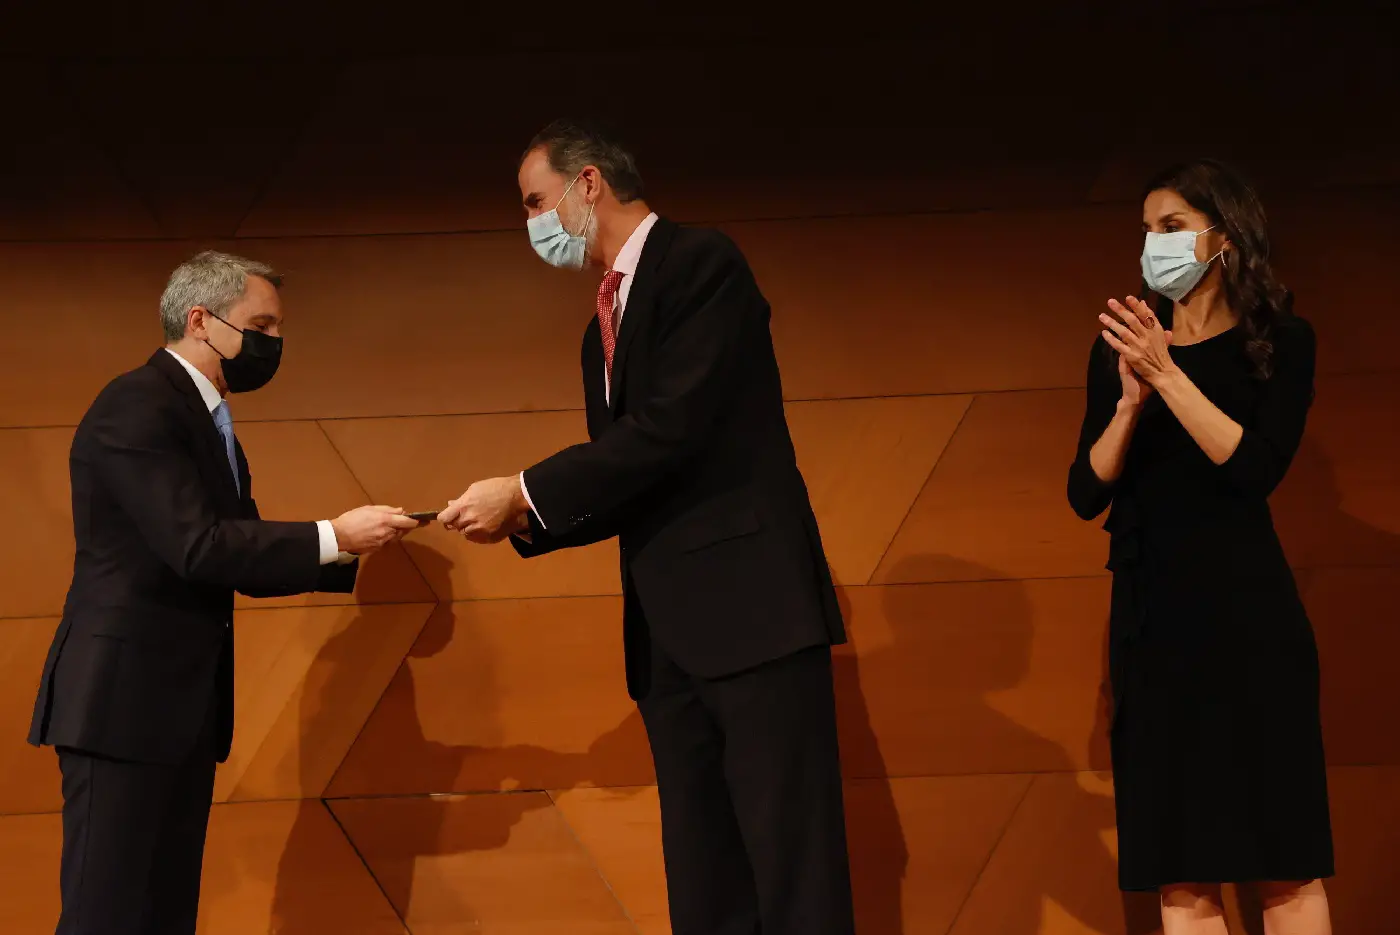 King Felipe and Queen Letizia of spain presented Francisco Cerecedo Journalism Award